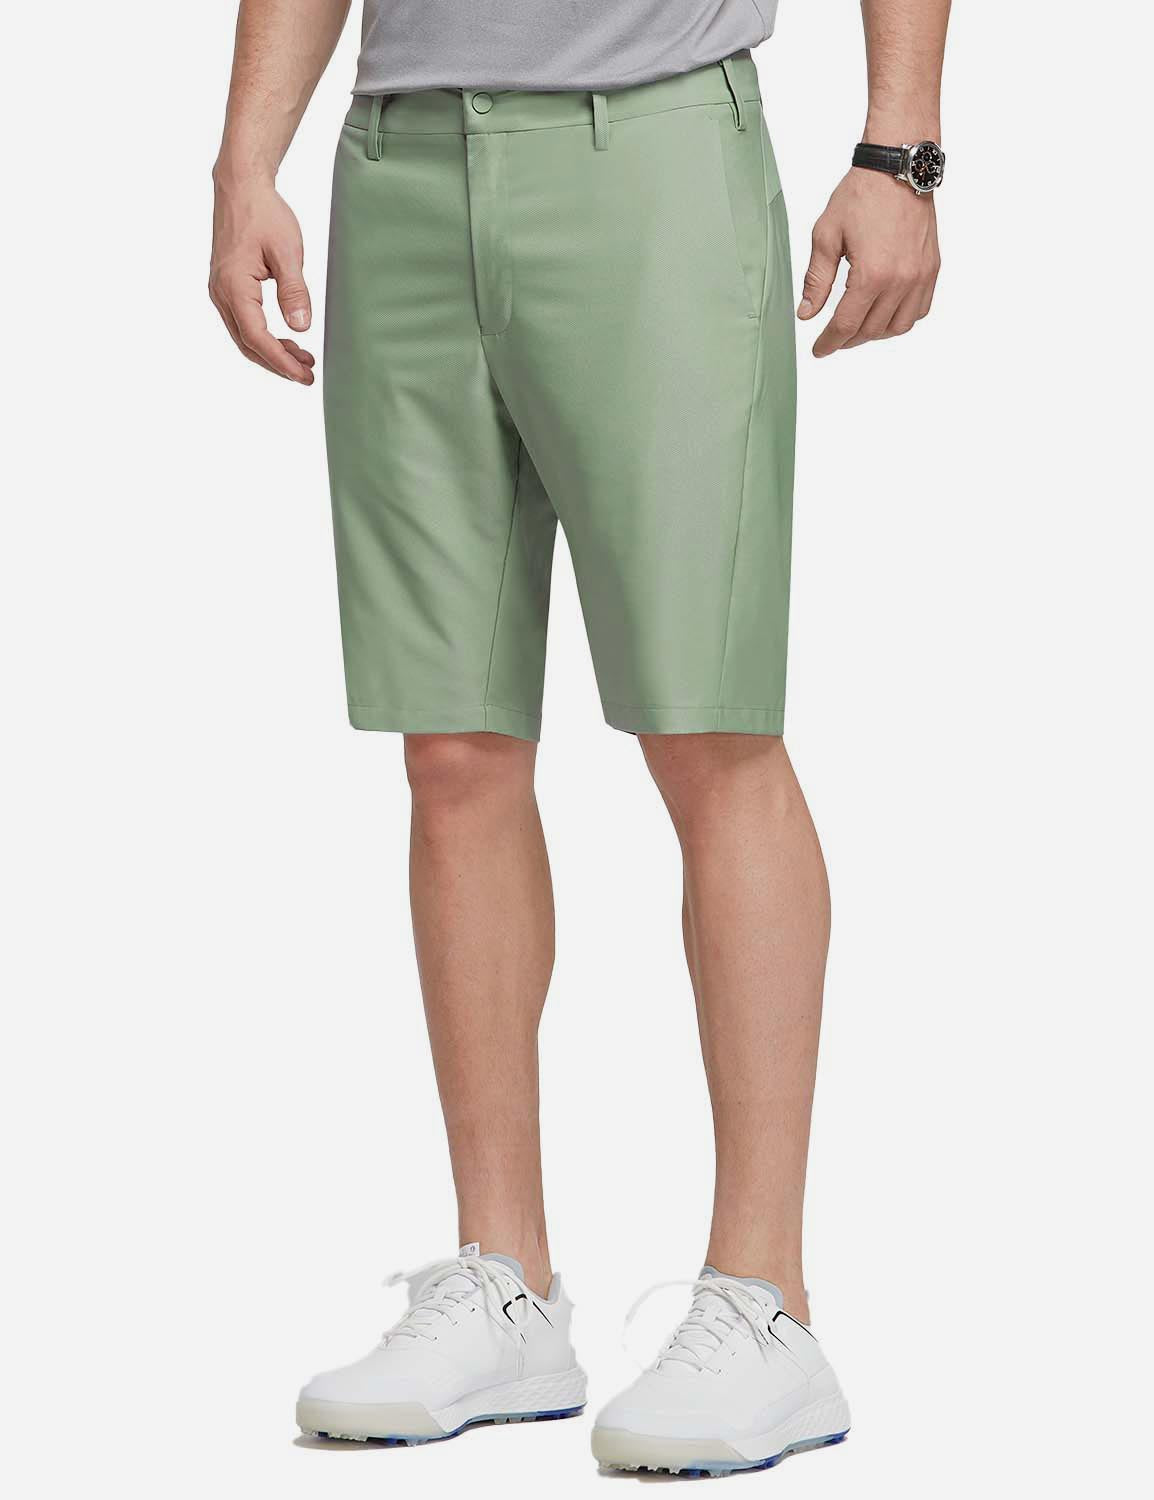 Baleaf Men's 10' UPF 50+ Lightweight Golf Shorts w Zipper Pockets cga005 Green Side